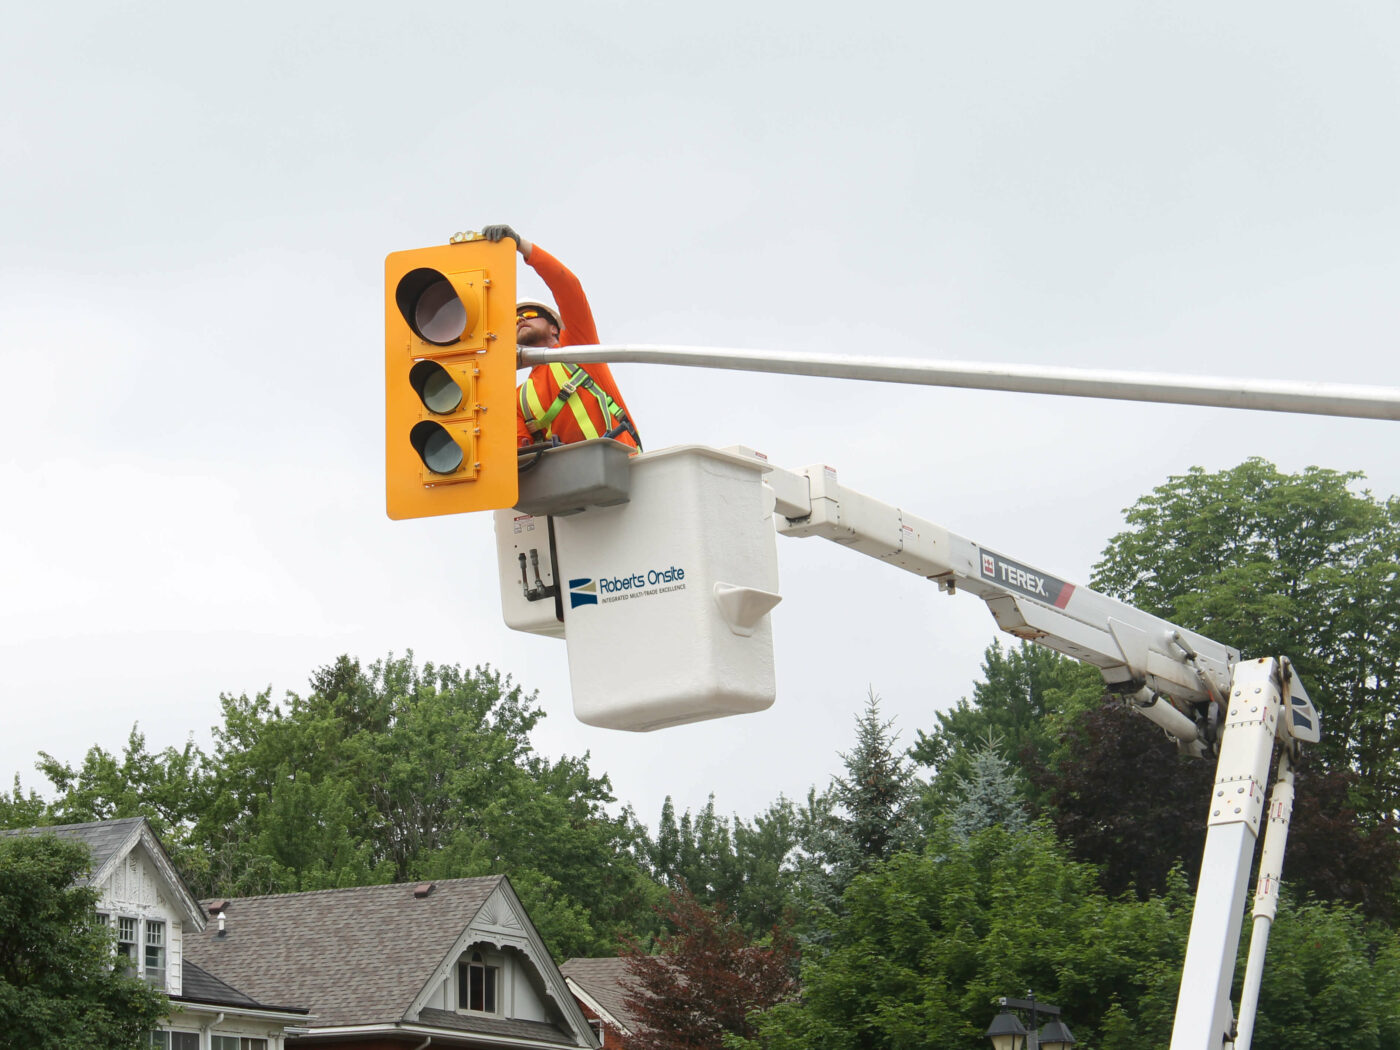 Installing adaptive traffic signal systems